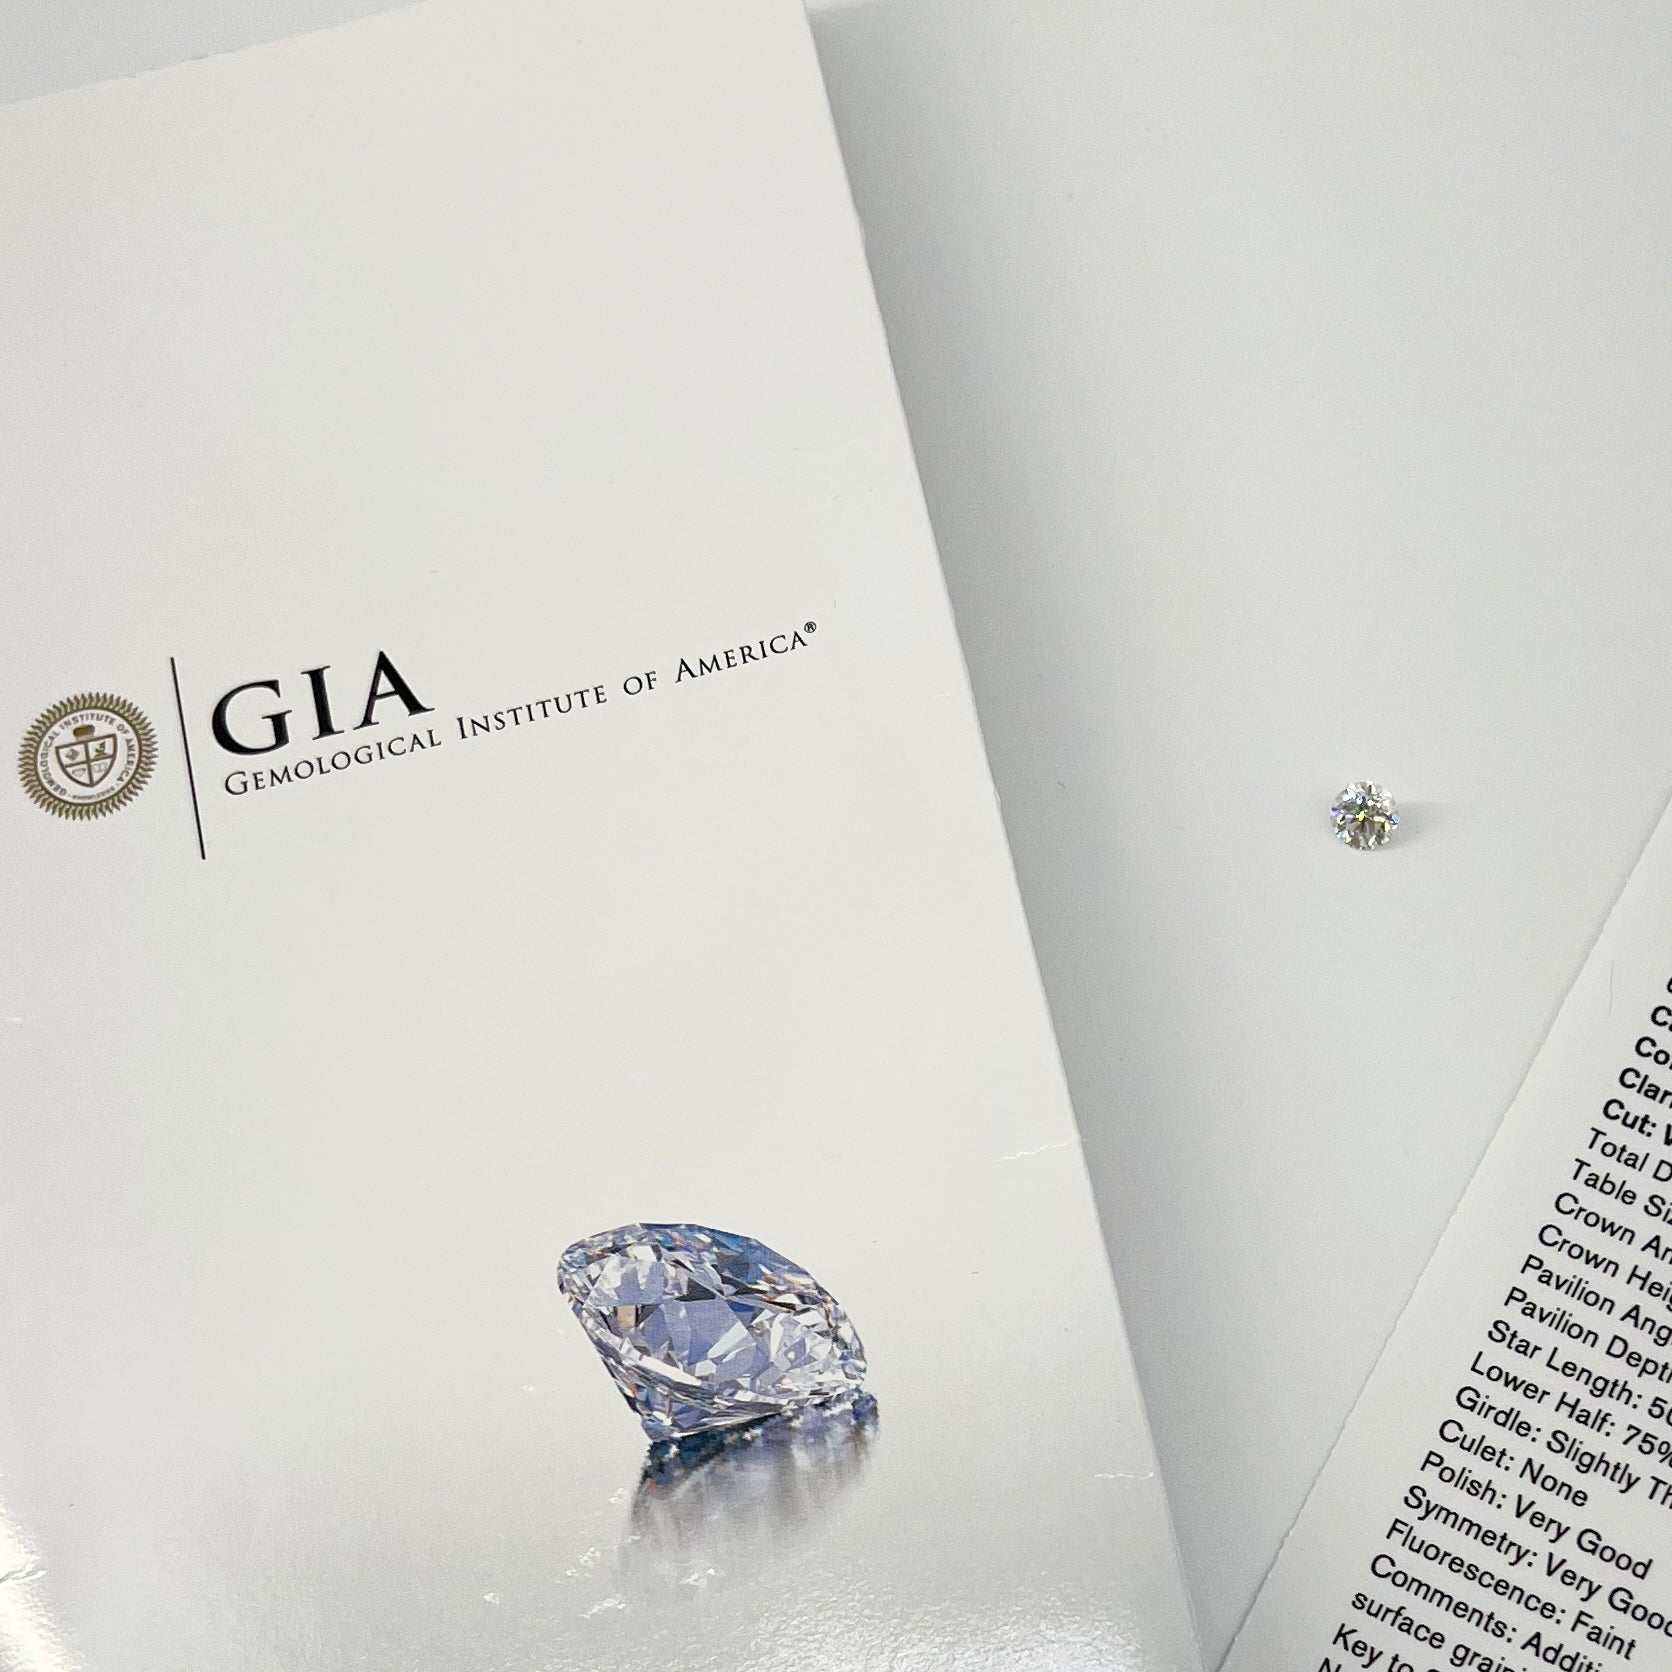 Guaranteed Authentic GIA Loose Diamond 1.03 Carat Natural Diamond 1.03/G/SI1 with GIA Certification